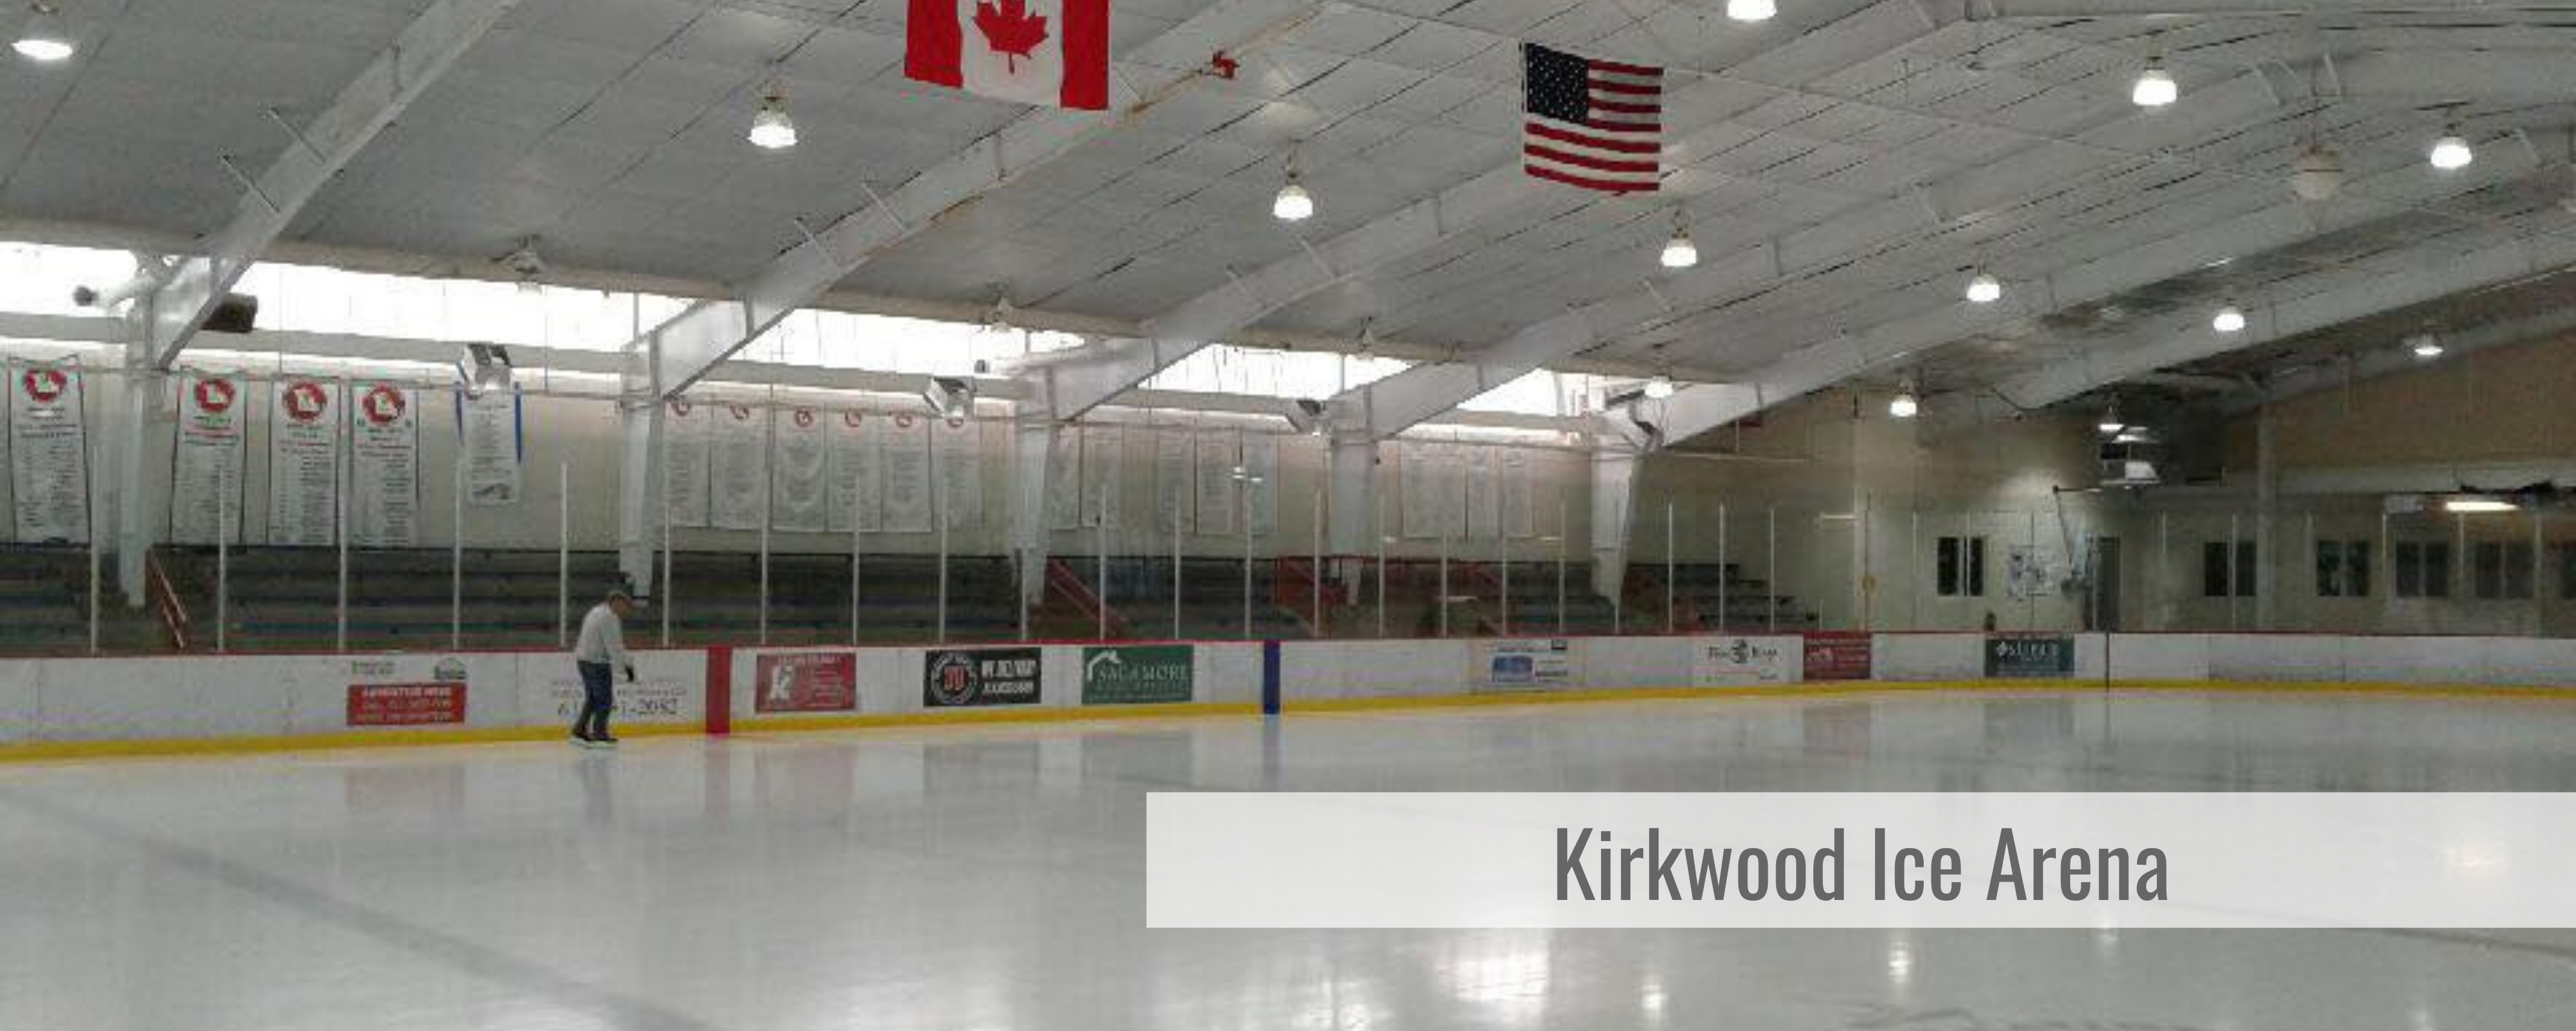 Kirkwood Ice Arena